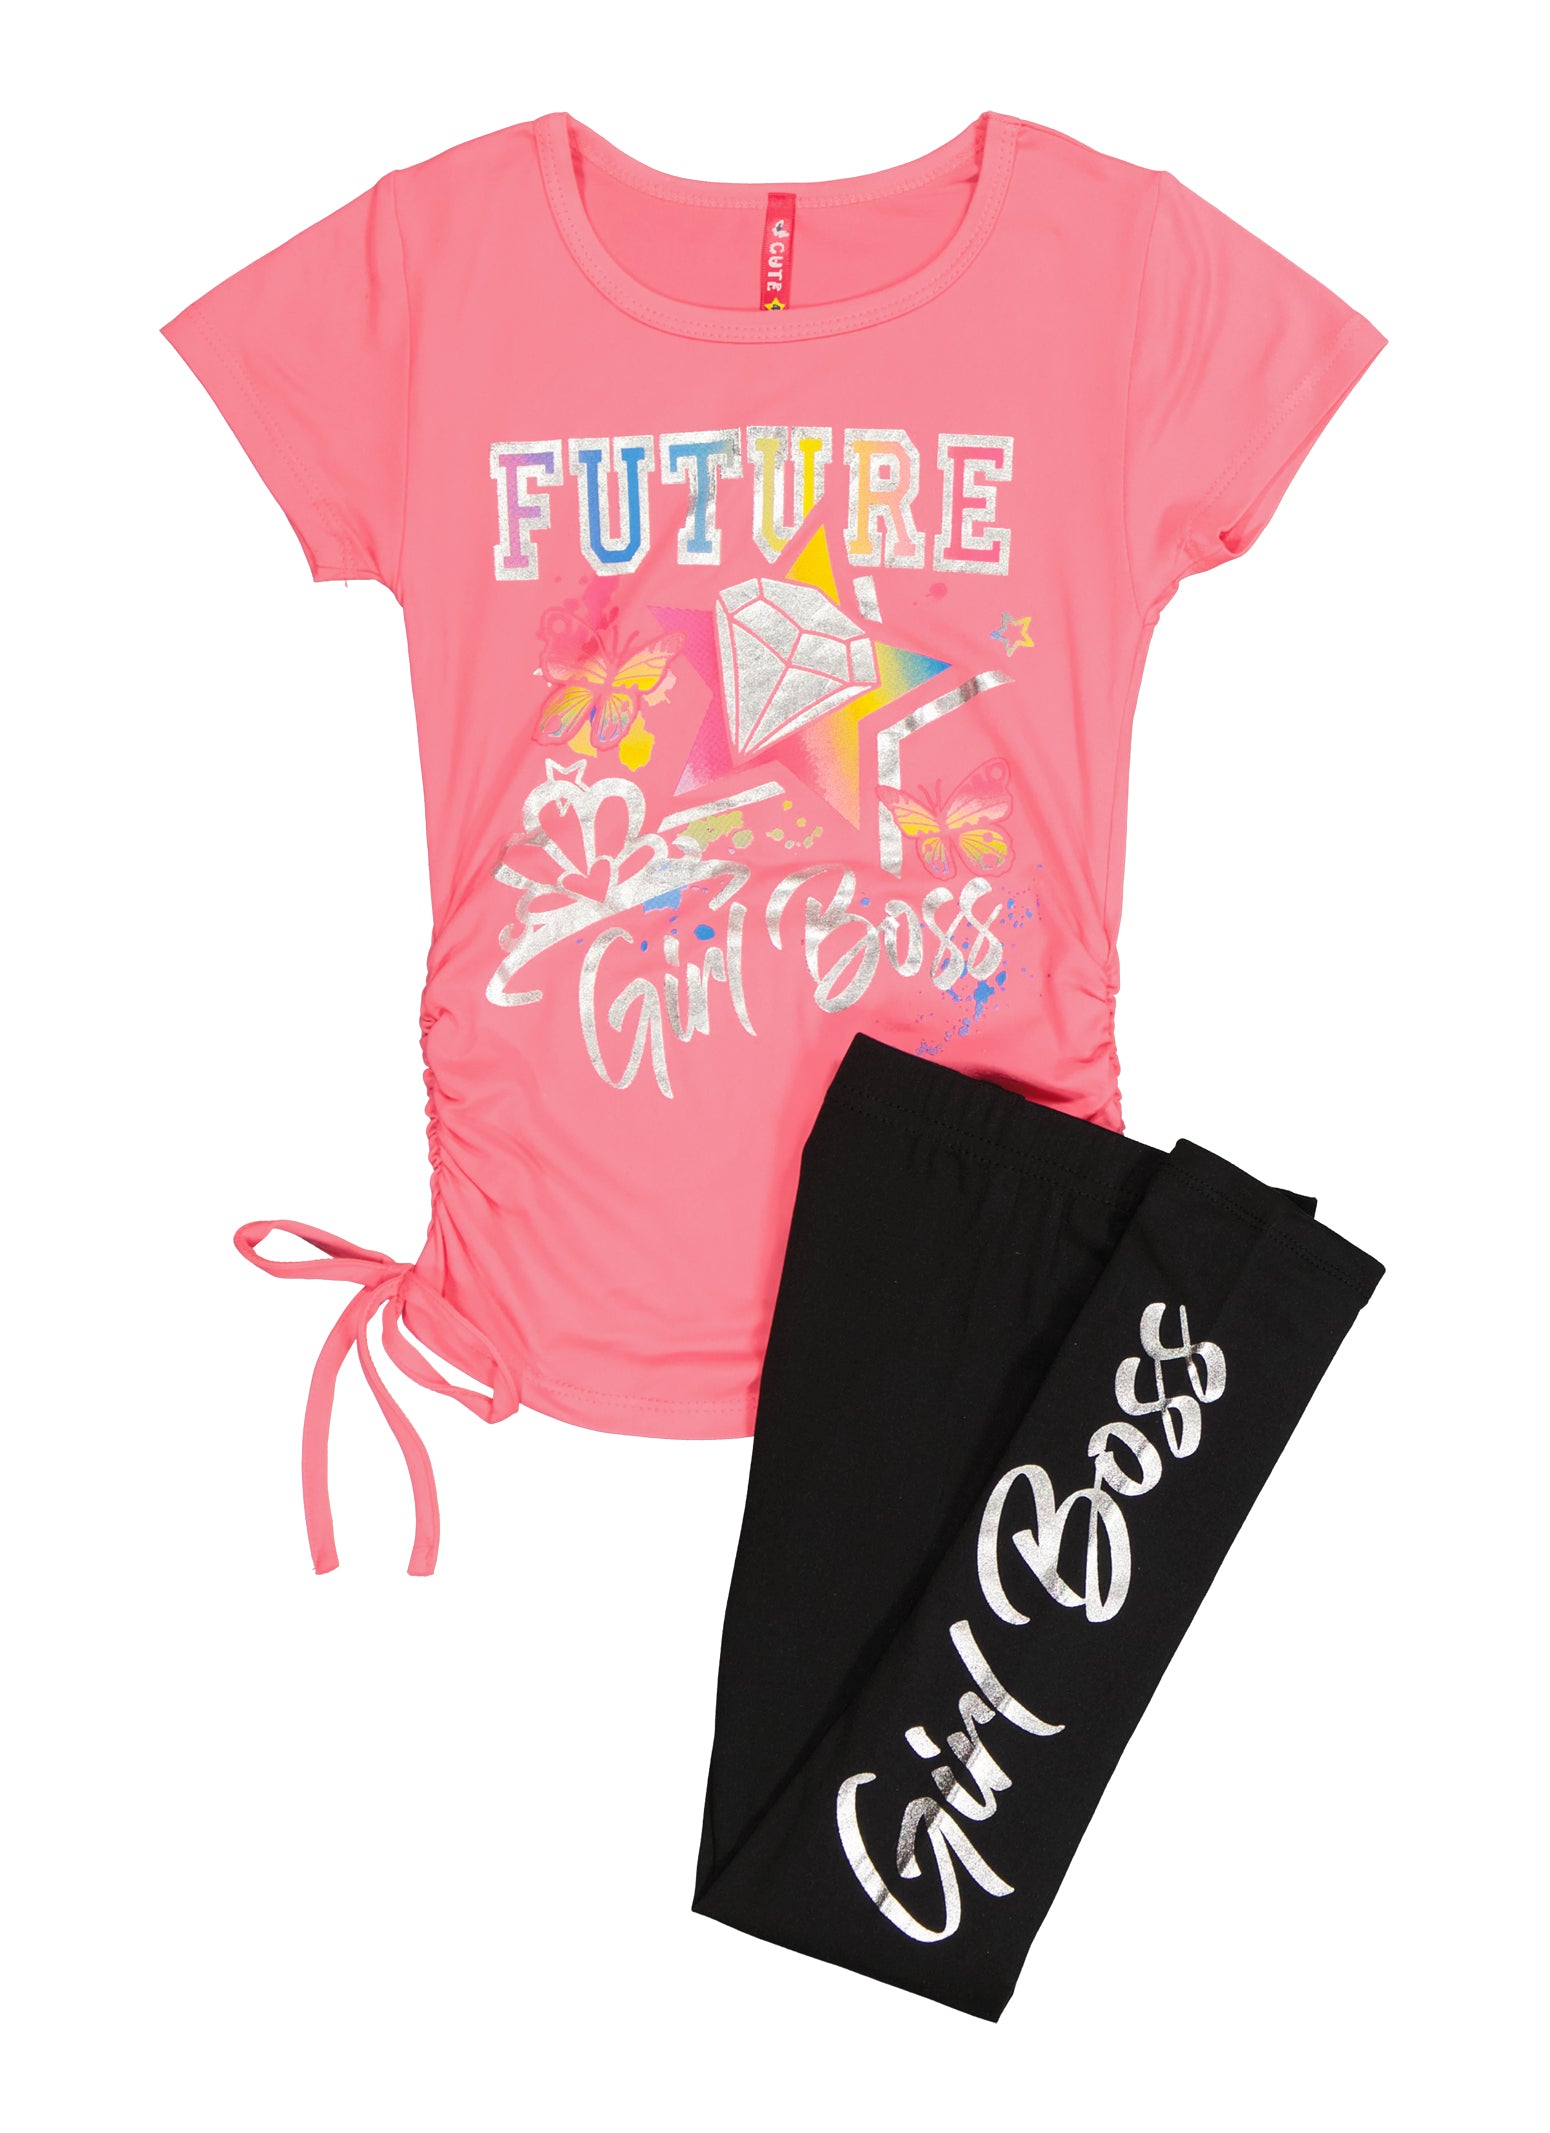 Little Girls Future Girl Boss Foil Graphic Tee and Leggings - Neon